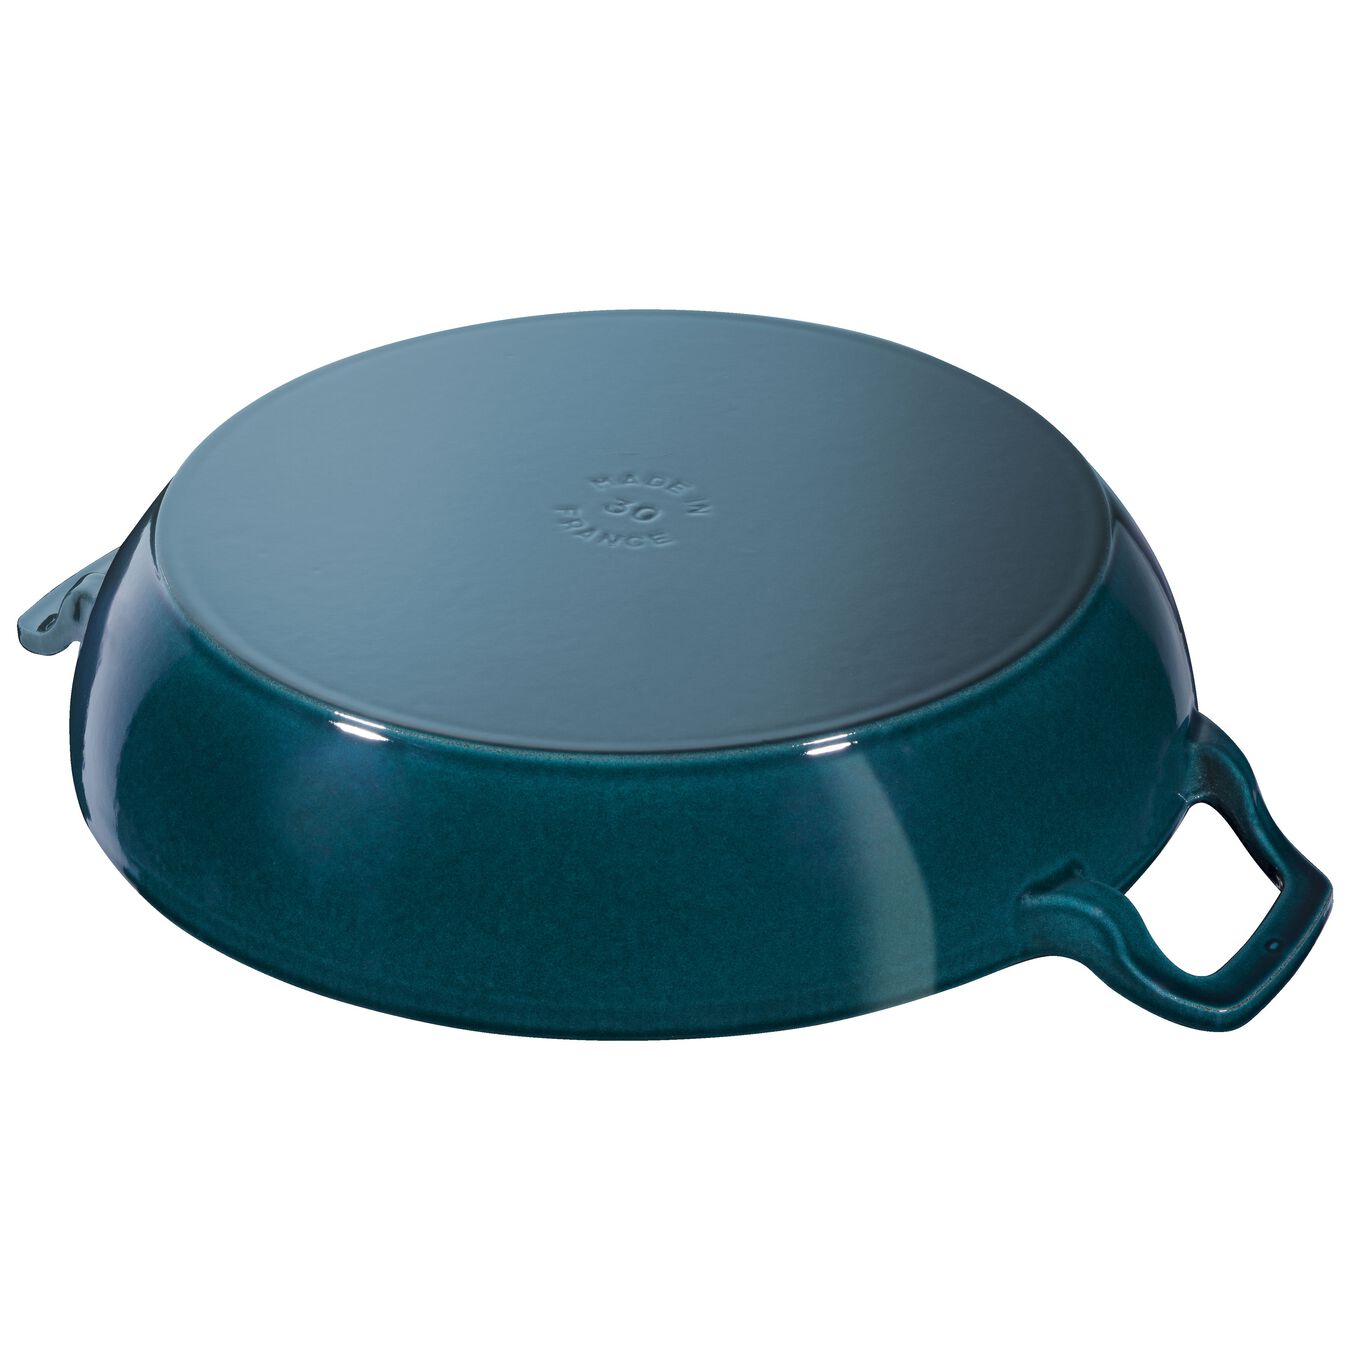 3.5 l cast iron round Saute pan, la-mer - Visual Imperfections,,large 3